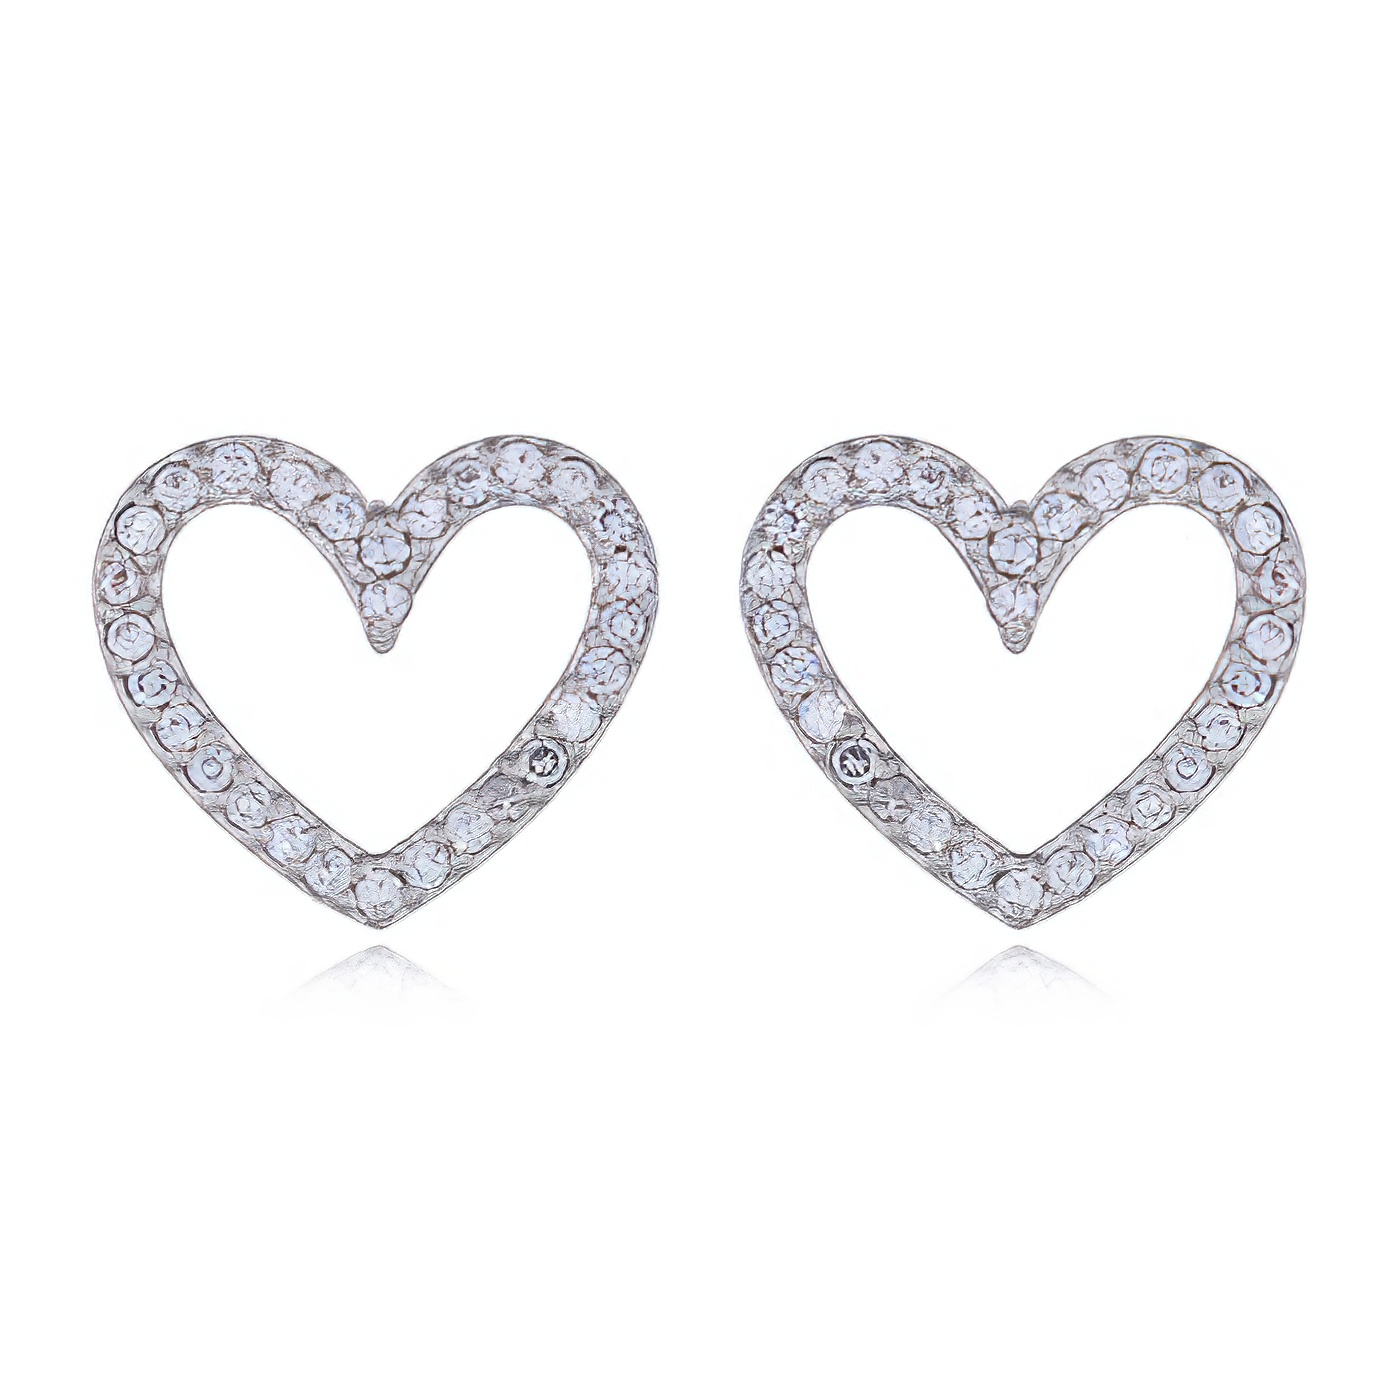 CZ In Heart Silver Plated Stud Earrings by BeYindi 